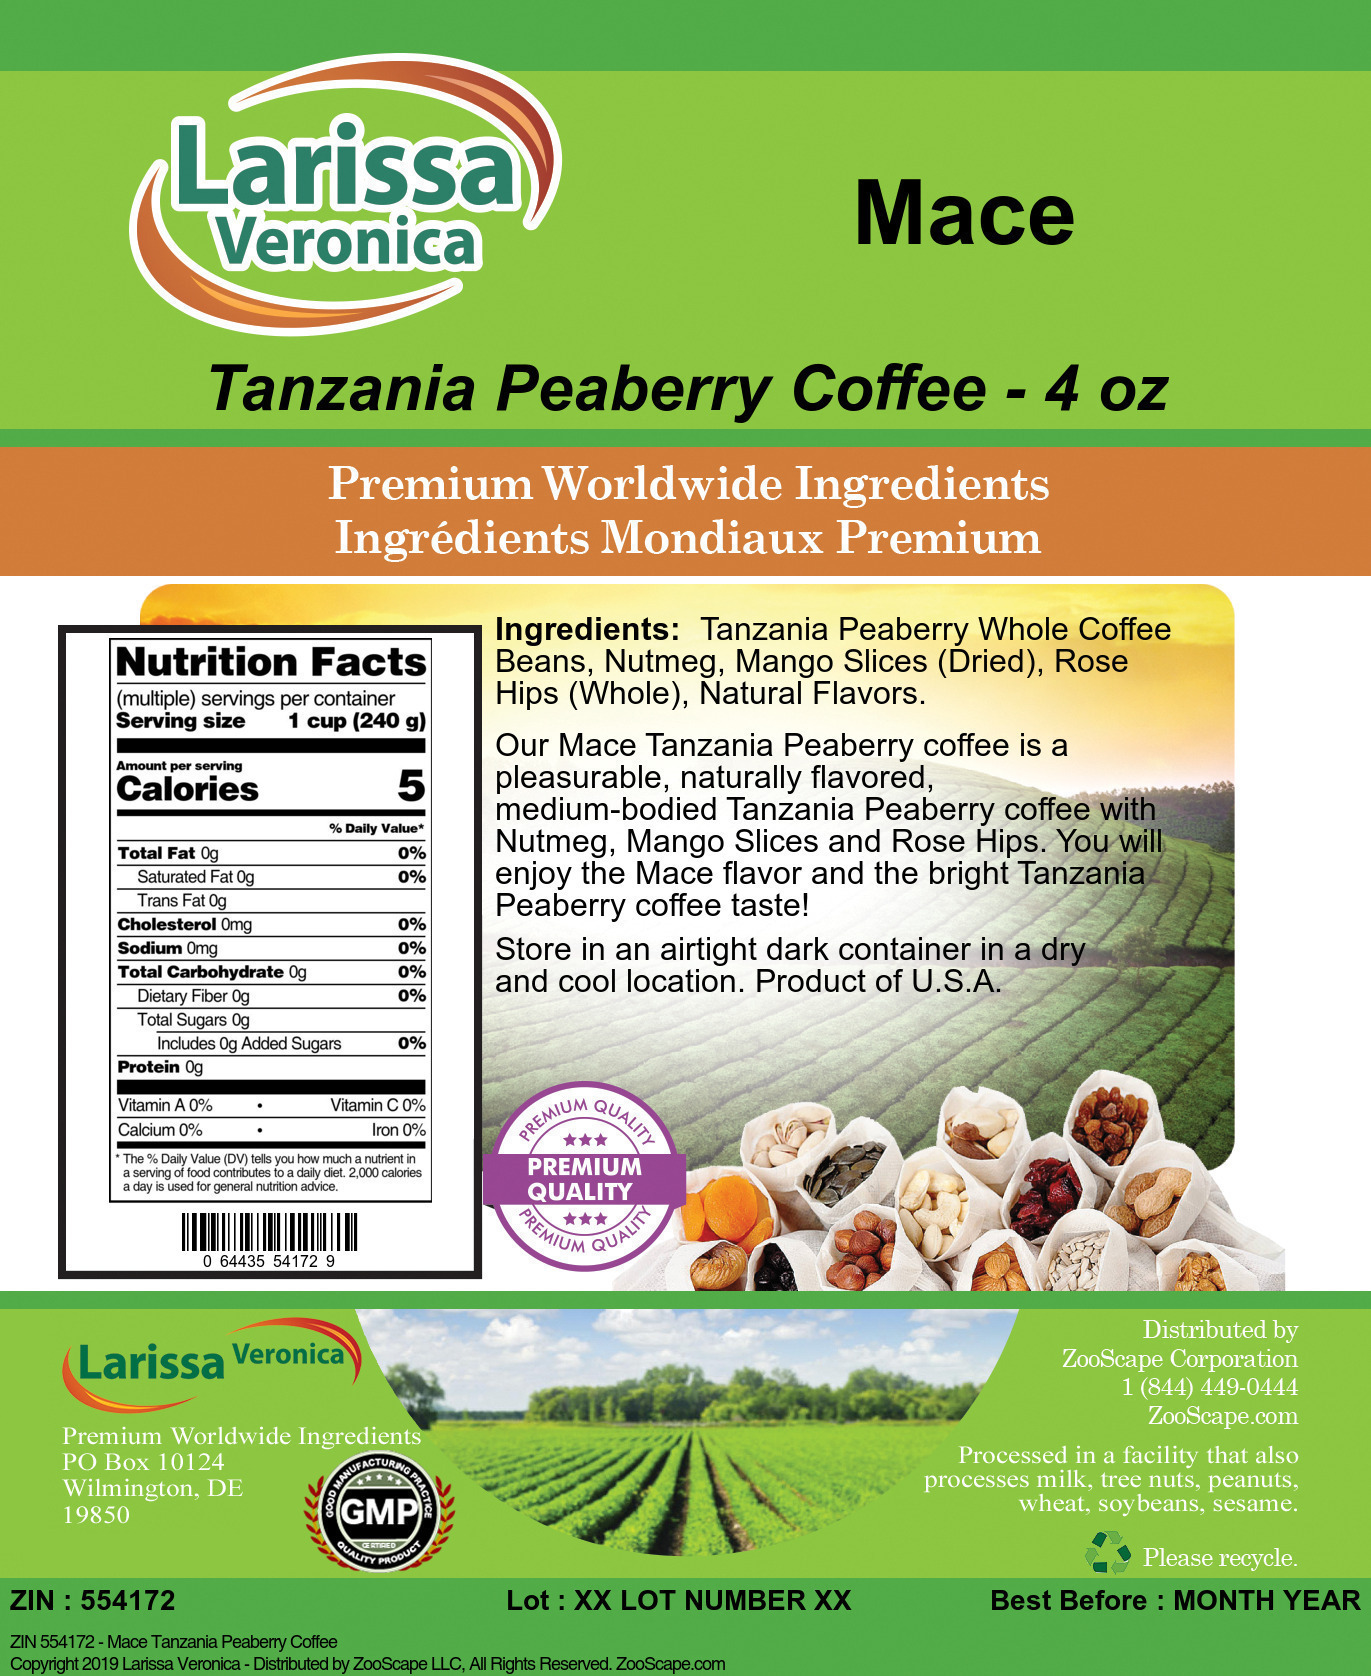 Mace Tanzania Peaberry Coffee - Label